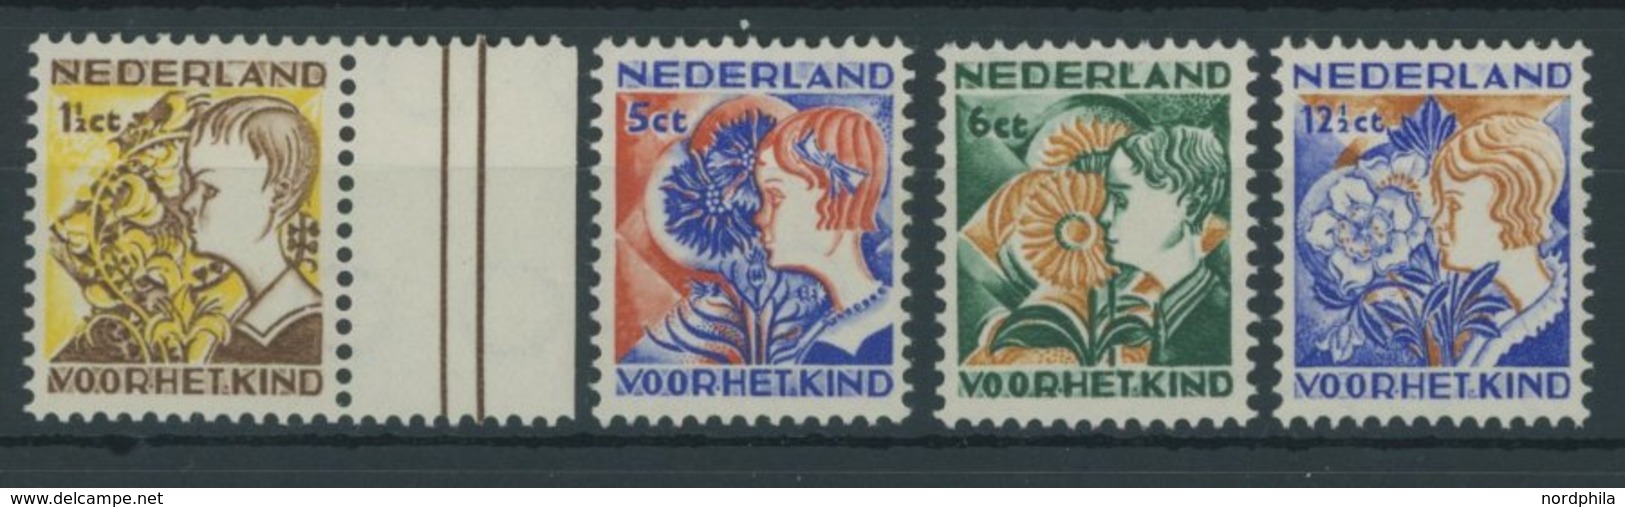 NIEDERLANDE 253-56A **, 1923, Voor Het Kind, Gezähnt K 121/2, Postfrischer Prachtsatz, Mi. 110.- - Niederlande